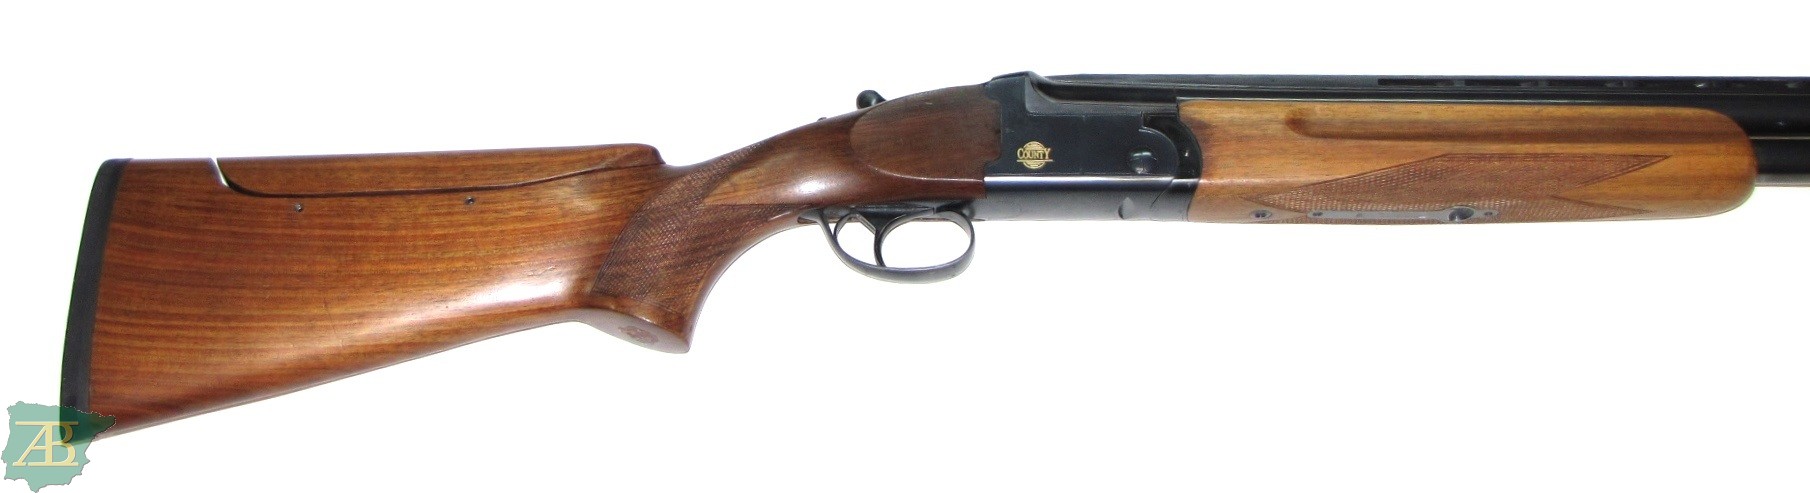 Escopeta superpuesta de TRAP COUNTY Ref 6939-armeriaiberica-2